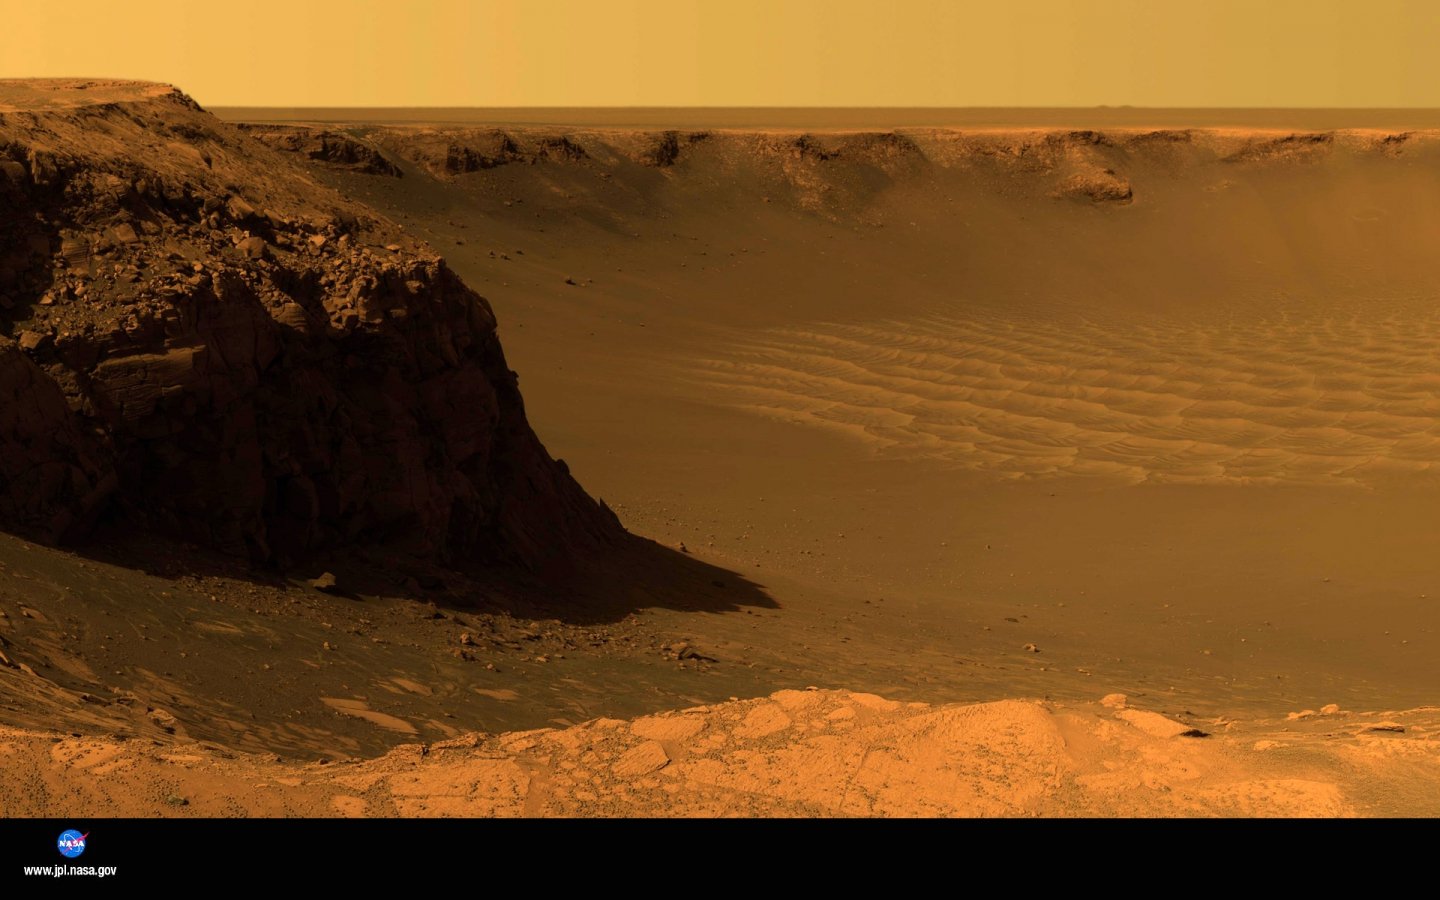 Somewhere on Mars